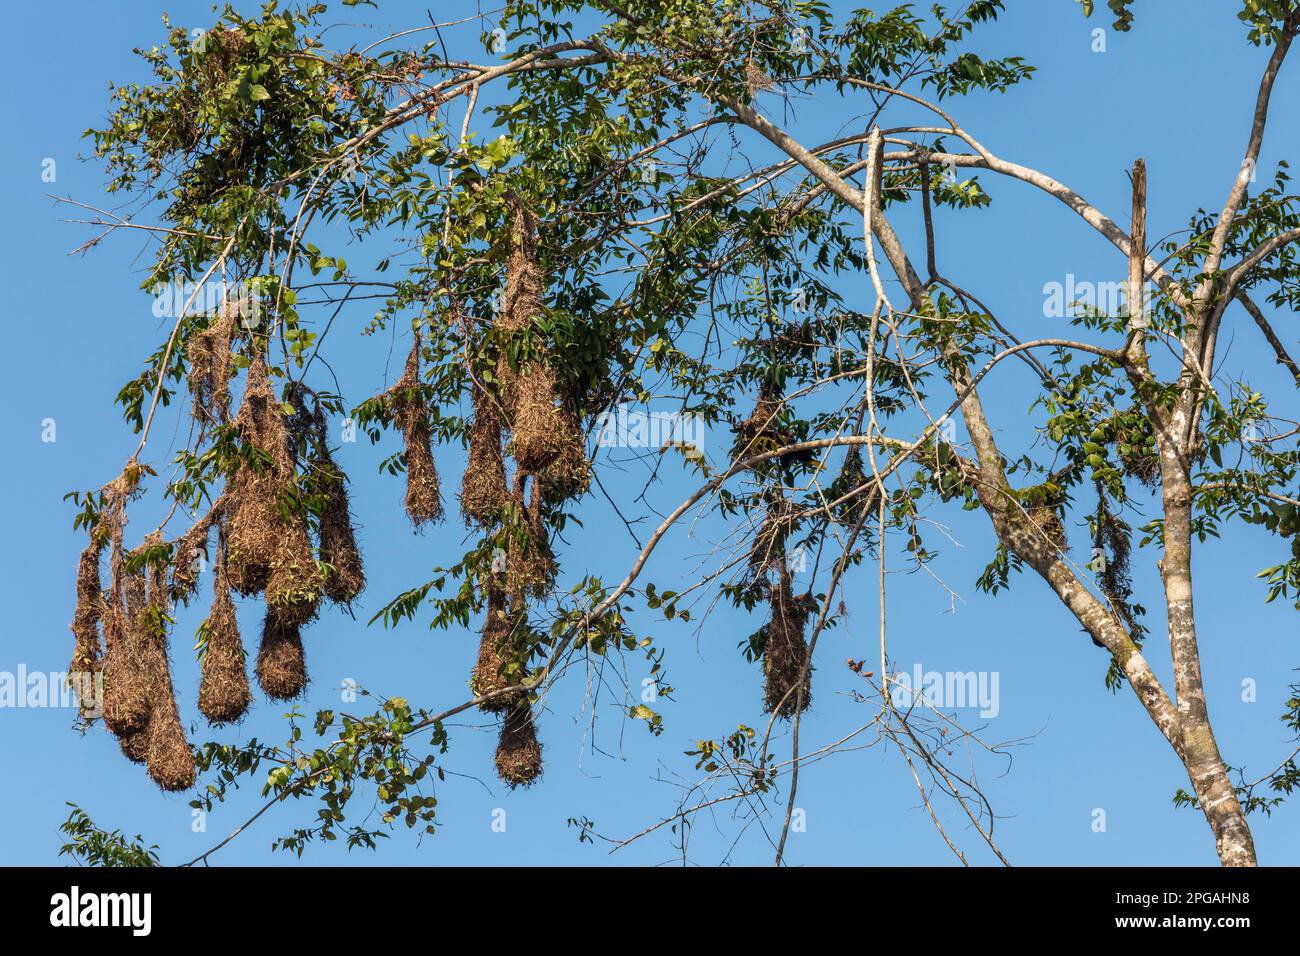 Tortuguero National Park, Costa Rica - Nests of Montezuma oropendola (Psarocolius montezuma). Stock Photo